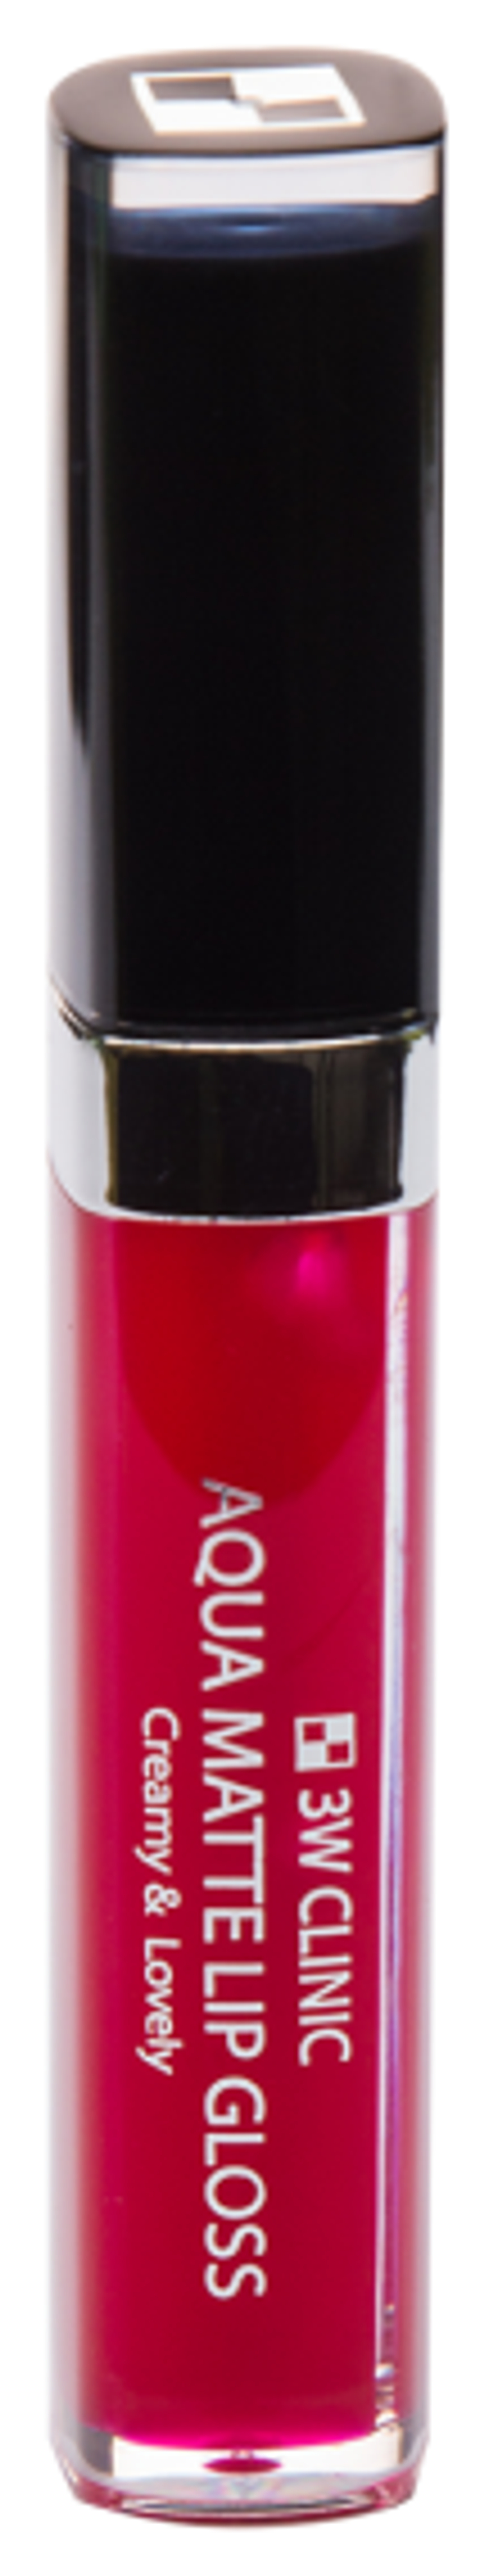 Блеск для губ 3W Clinic #06 Aqua Matte Lip Gloss Scarlet Wine цвет Алое Вино 6,5 г